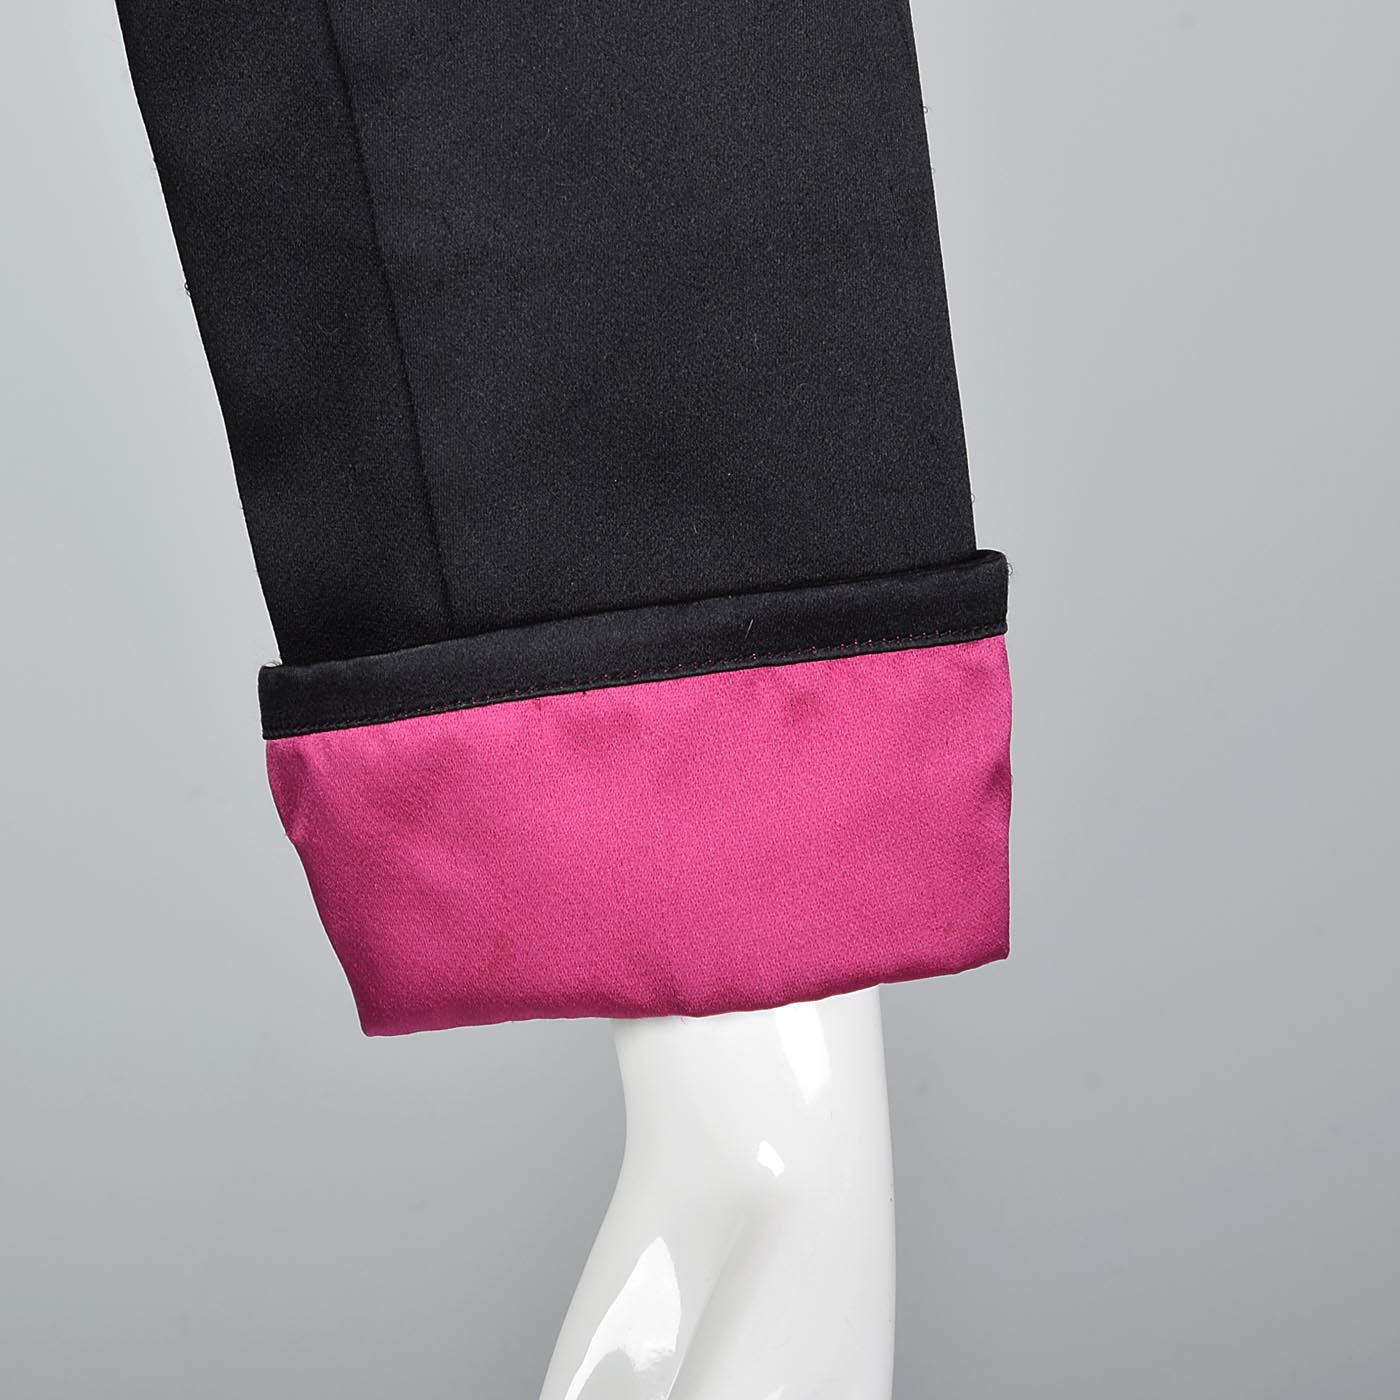 Yves Saint Laurent Rive Gauche Black Satin Satin Skirt Suit with